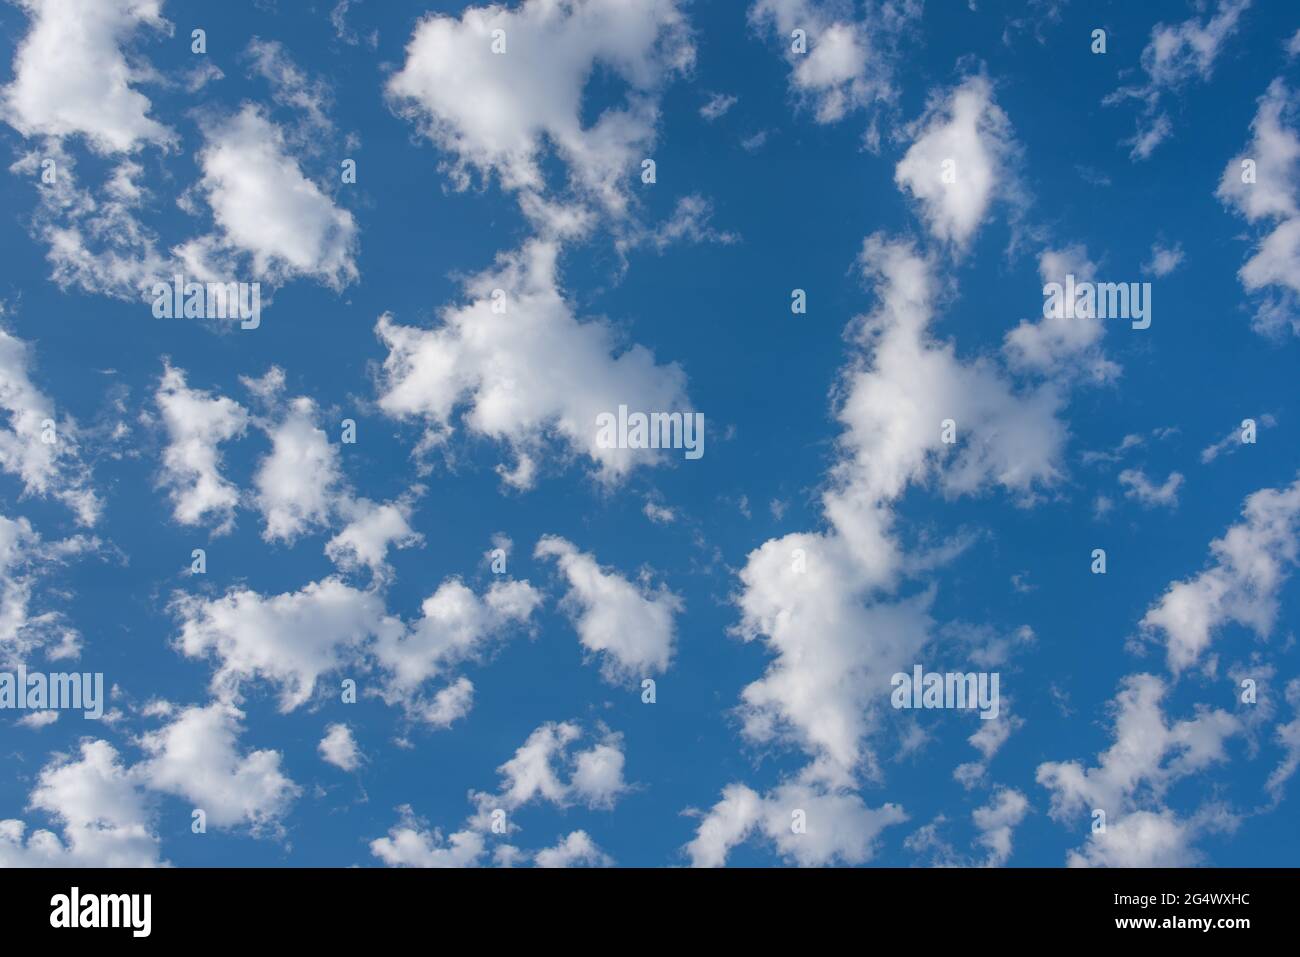 Stock Fotos für Wetter Magazin Websites teilweise bewölkt blauen Himmel. Geschwollene Kugeln Baumwollkugel Wolken Stockfoto